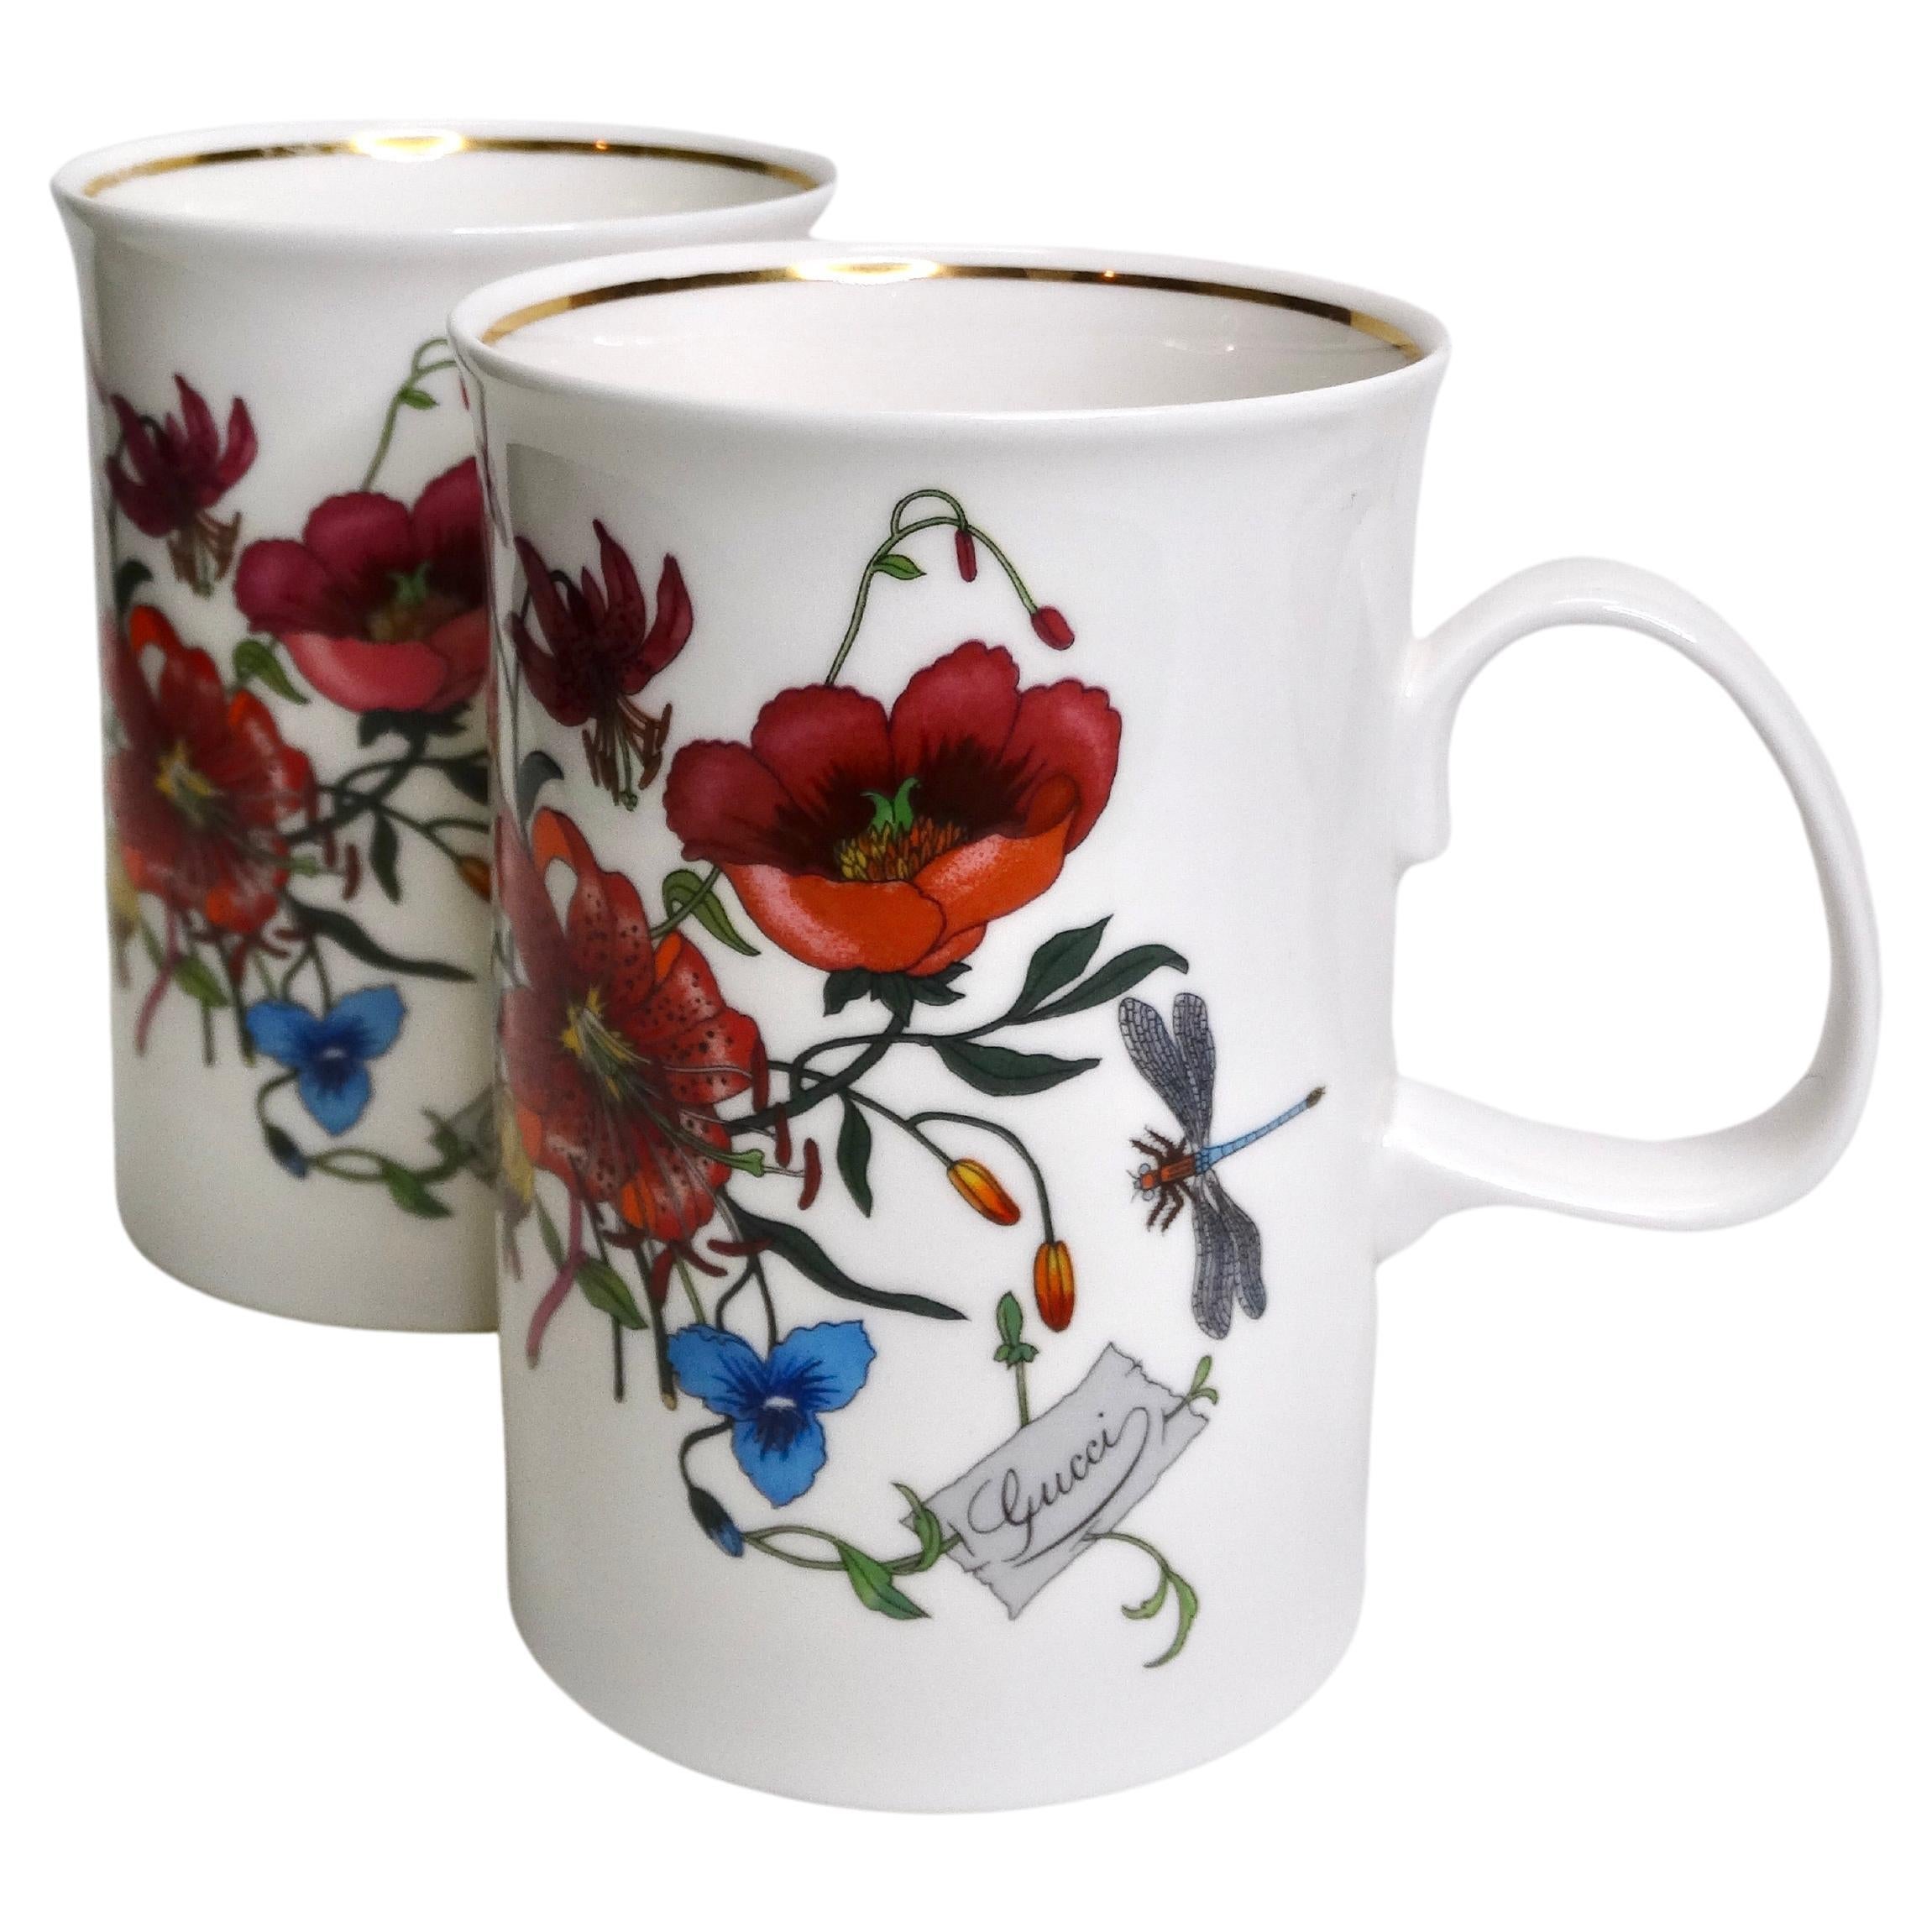 Gucci V Accornero Floral Mugs- Set of 7